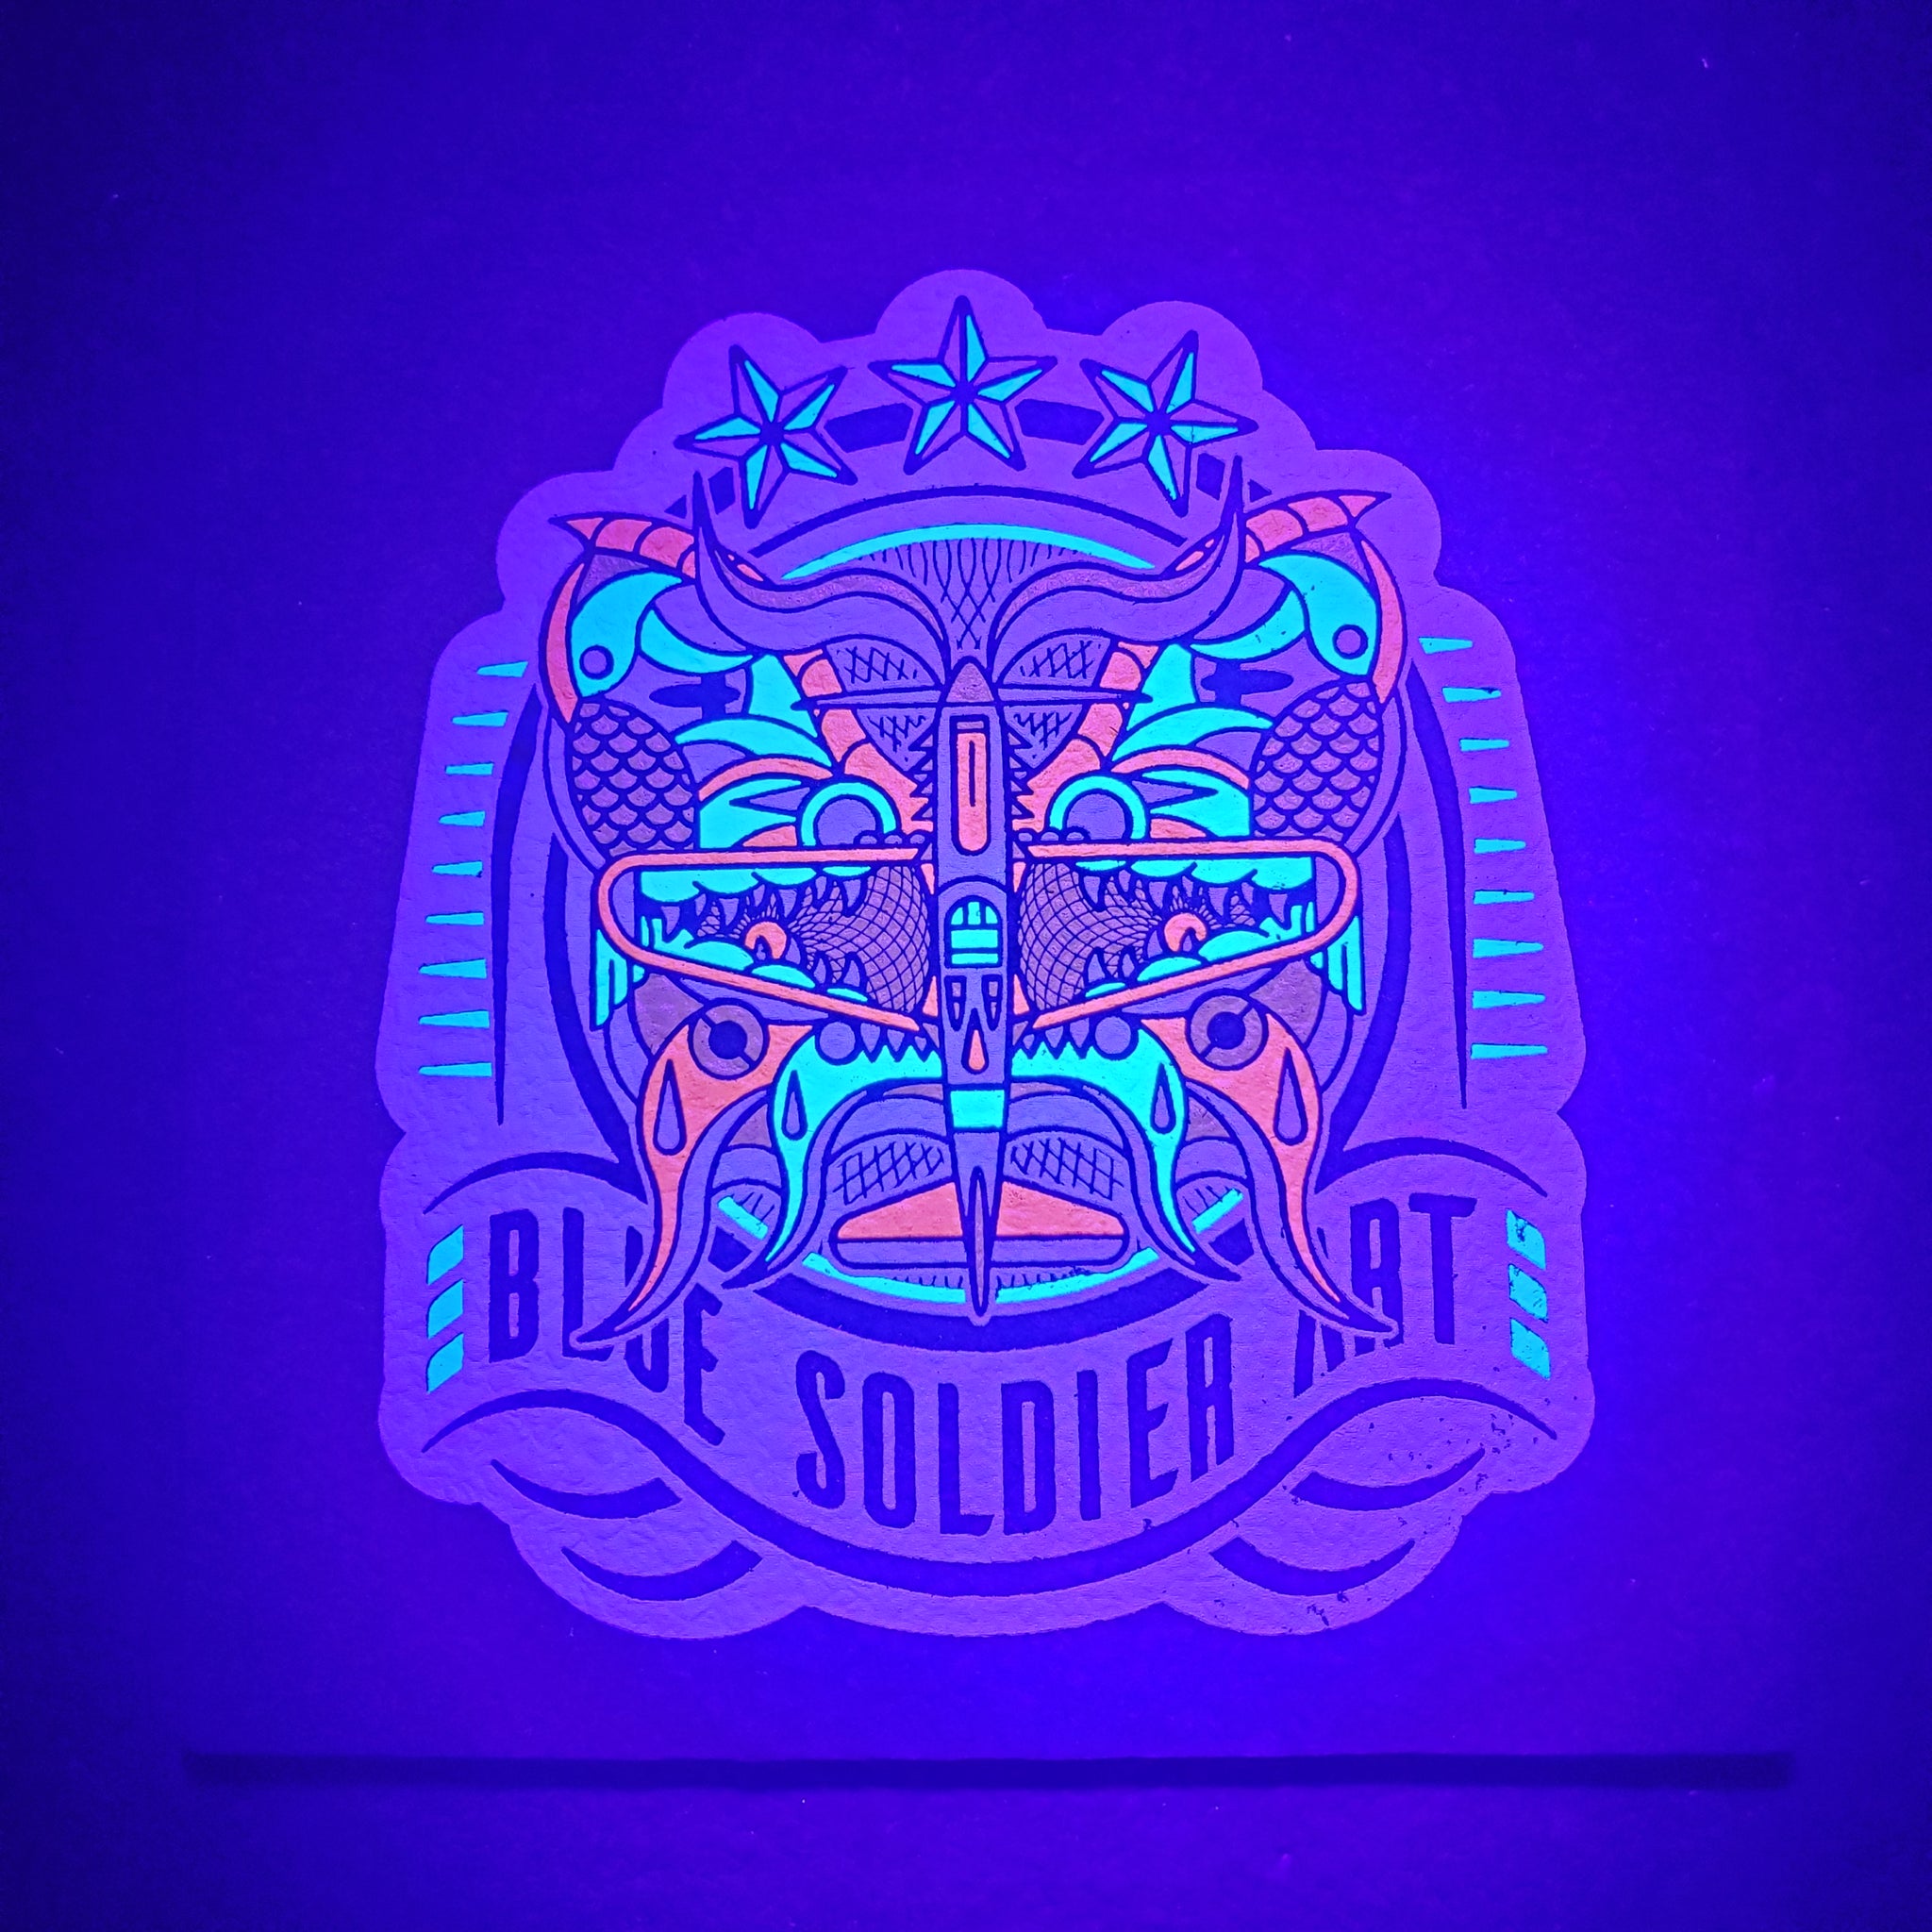 Blue Soldier Art - UV Moodmat (Signed)